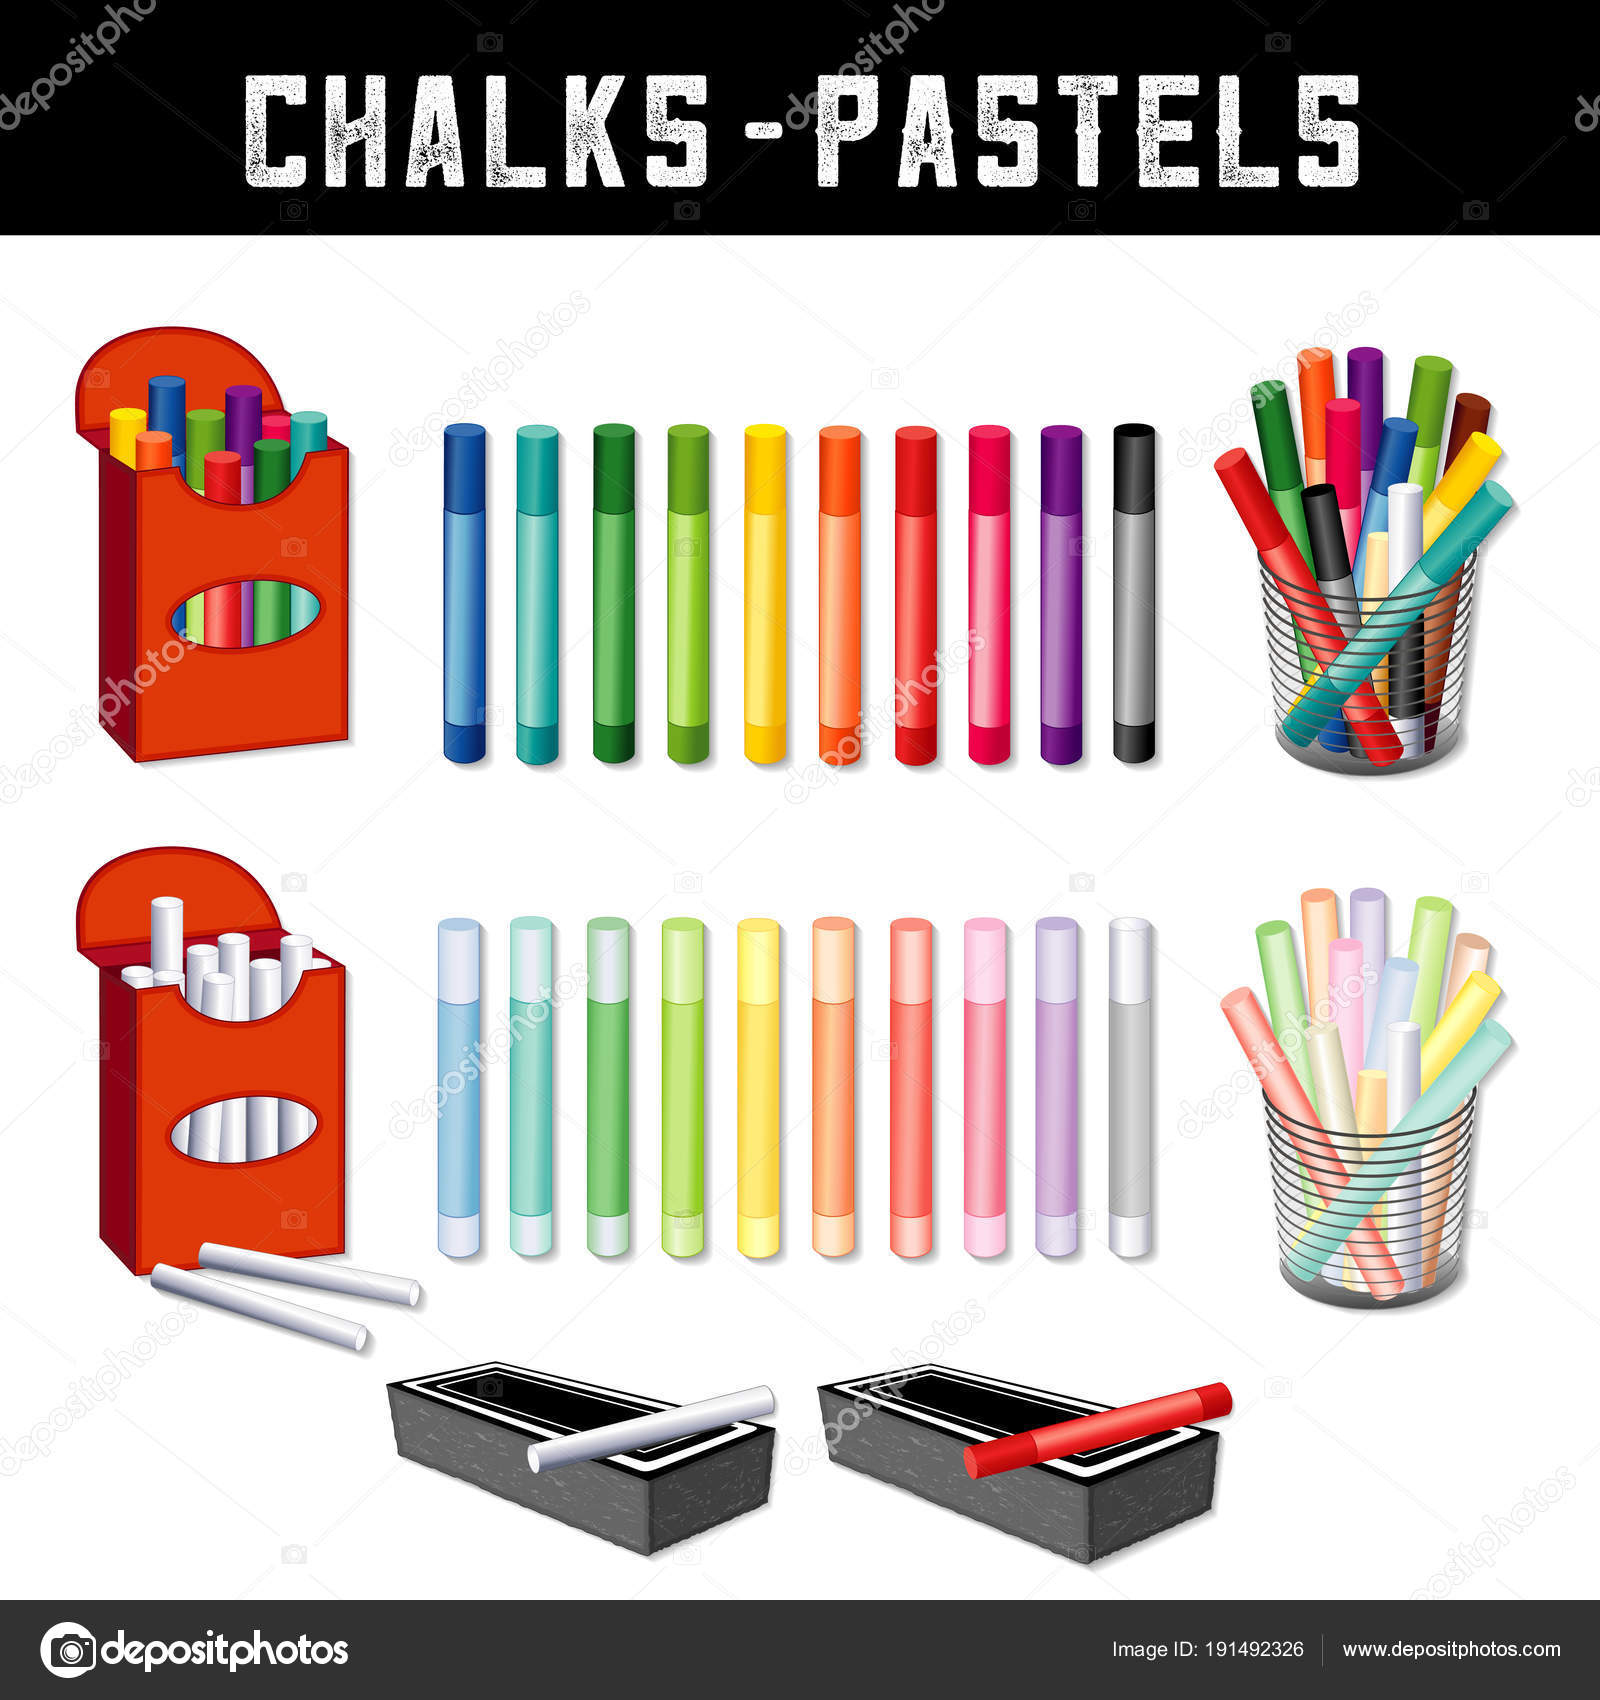 https://st3.depositphotos.com/11807922/19149/v/1600/depositphotos_191492326-stock-illustration-chalks-pastel-crayons-art-supplies.jpg